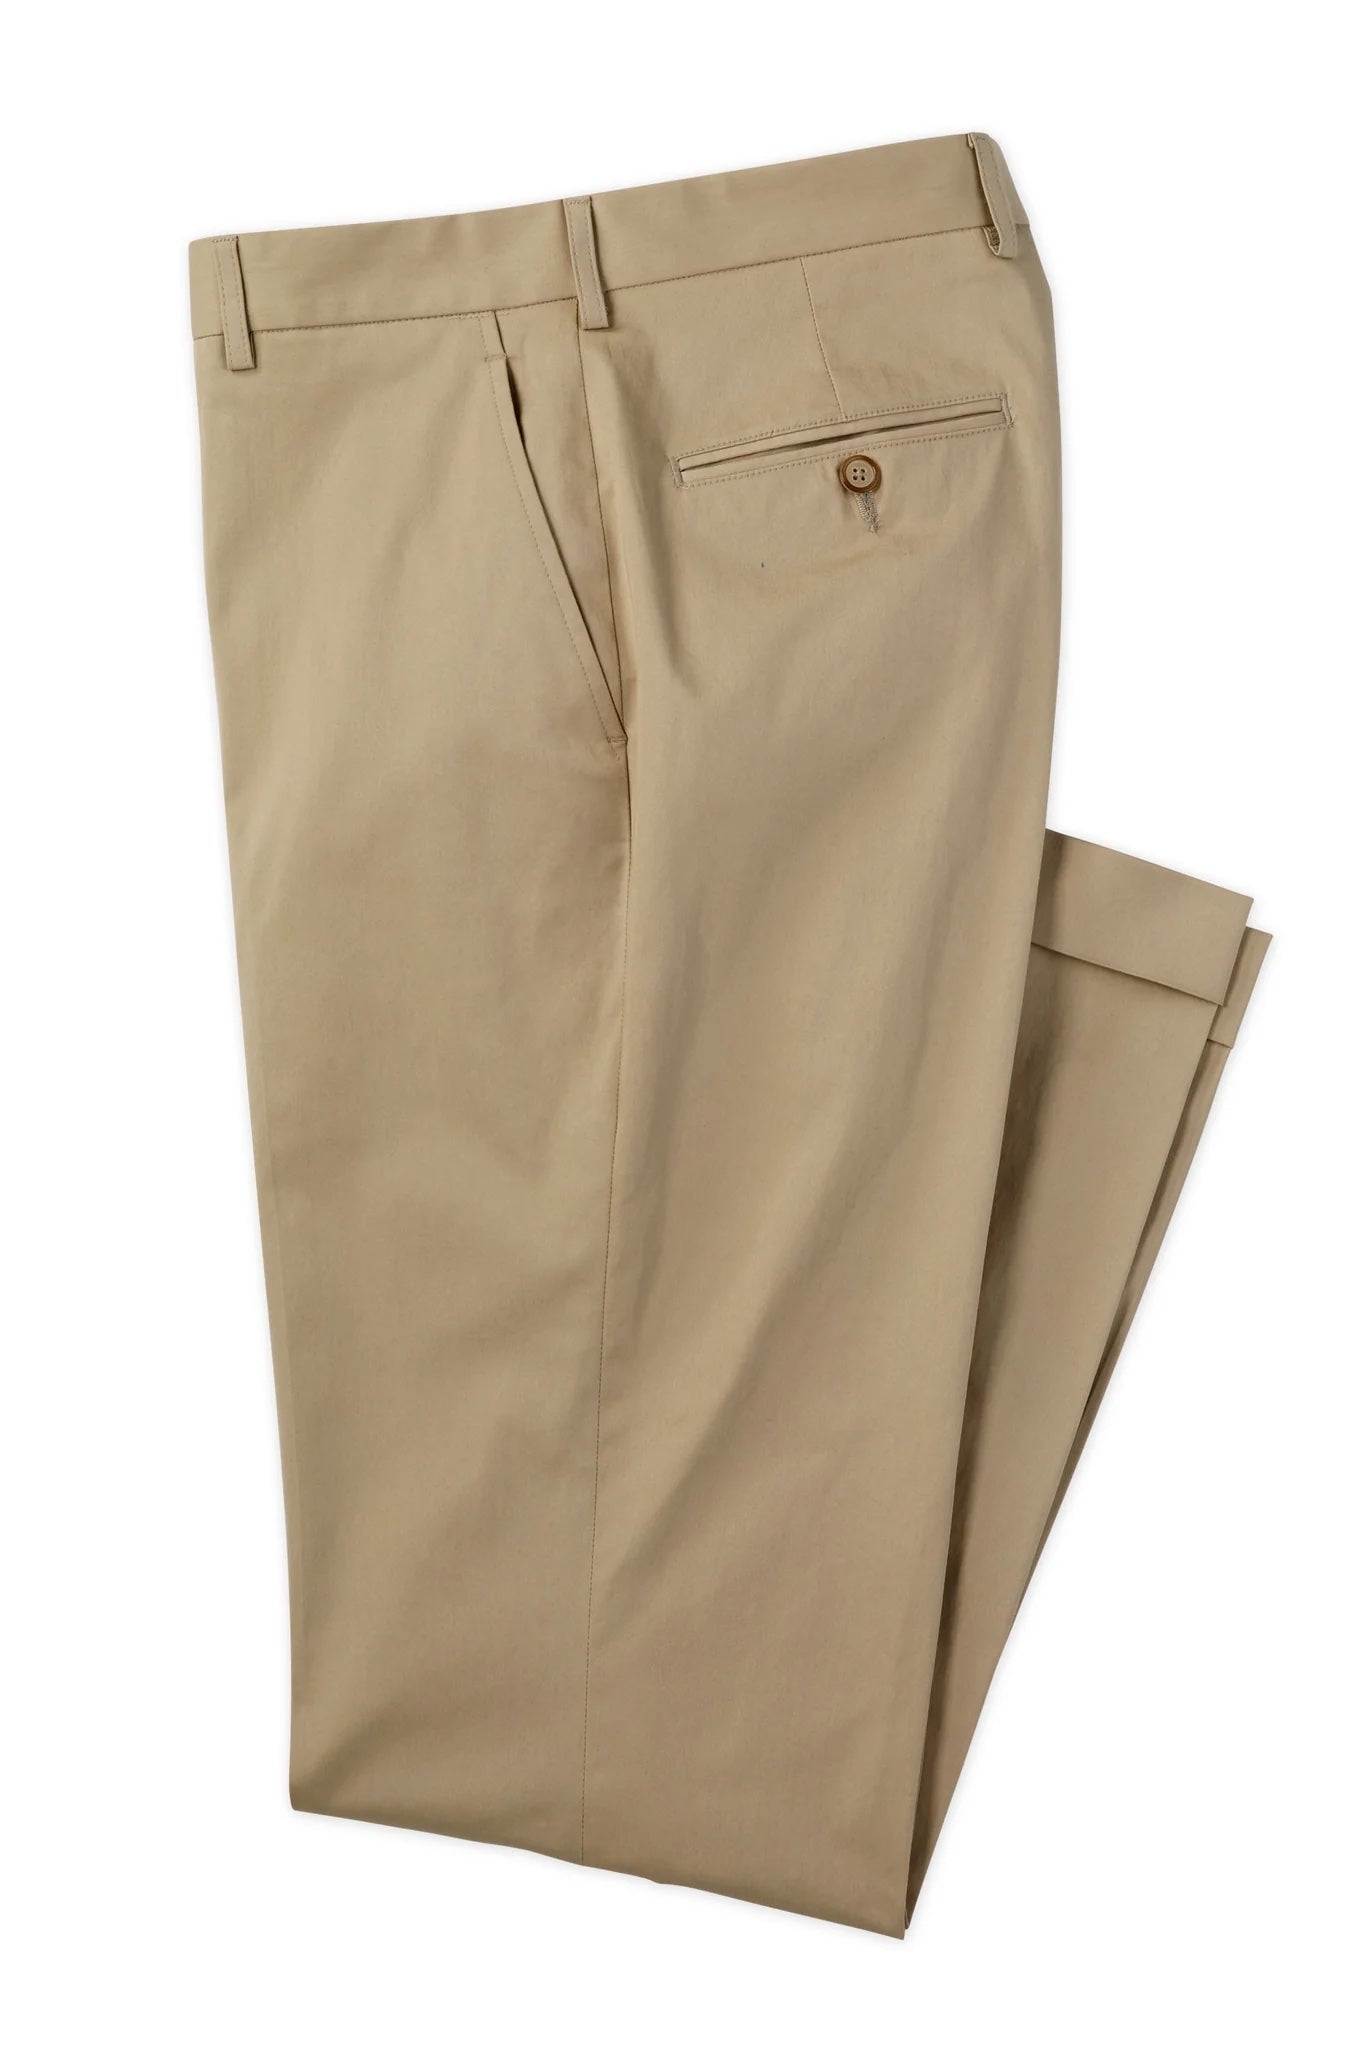 Ketyyh-chn99 Bell Bottom Pants for Men Mens Chinos Slim Fit Stretch  Flat-Front Skinny Dress Pants Grey Plaid - Walmart.com